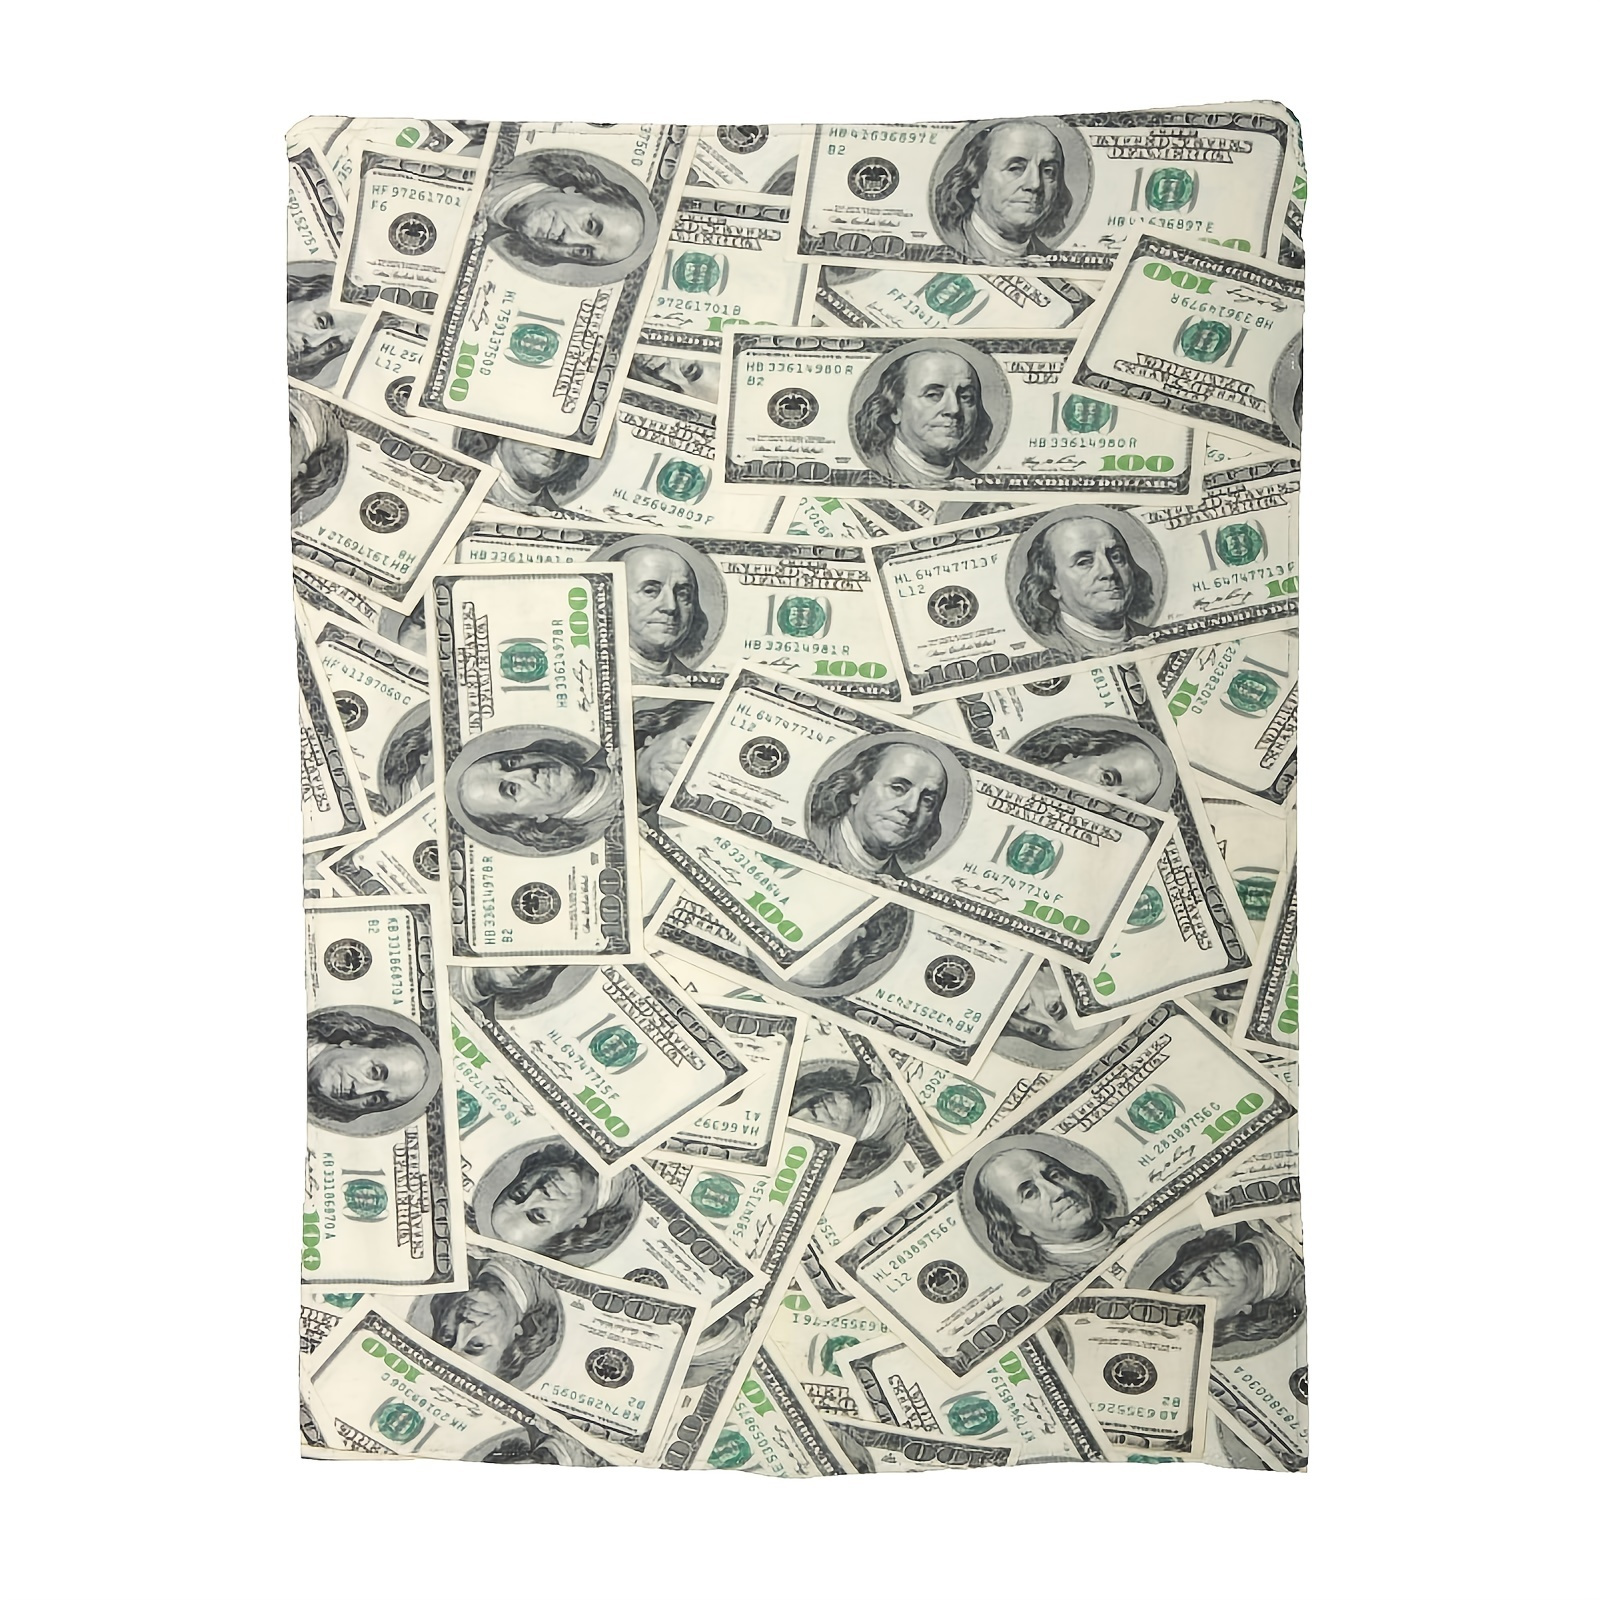  Jekeno Money Blanket 100 Dollar Bills Pattern Print